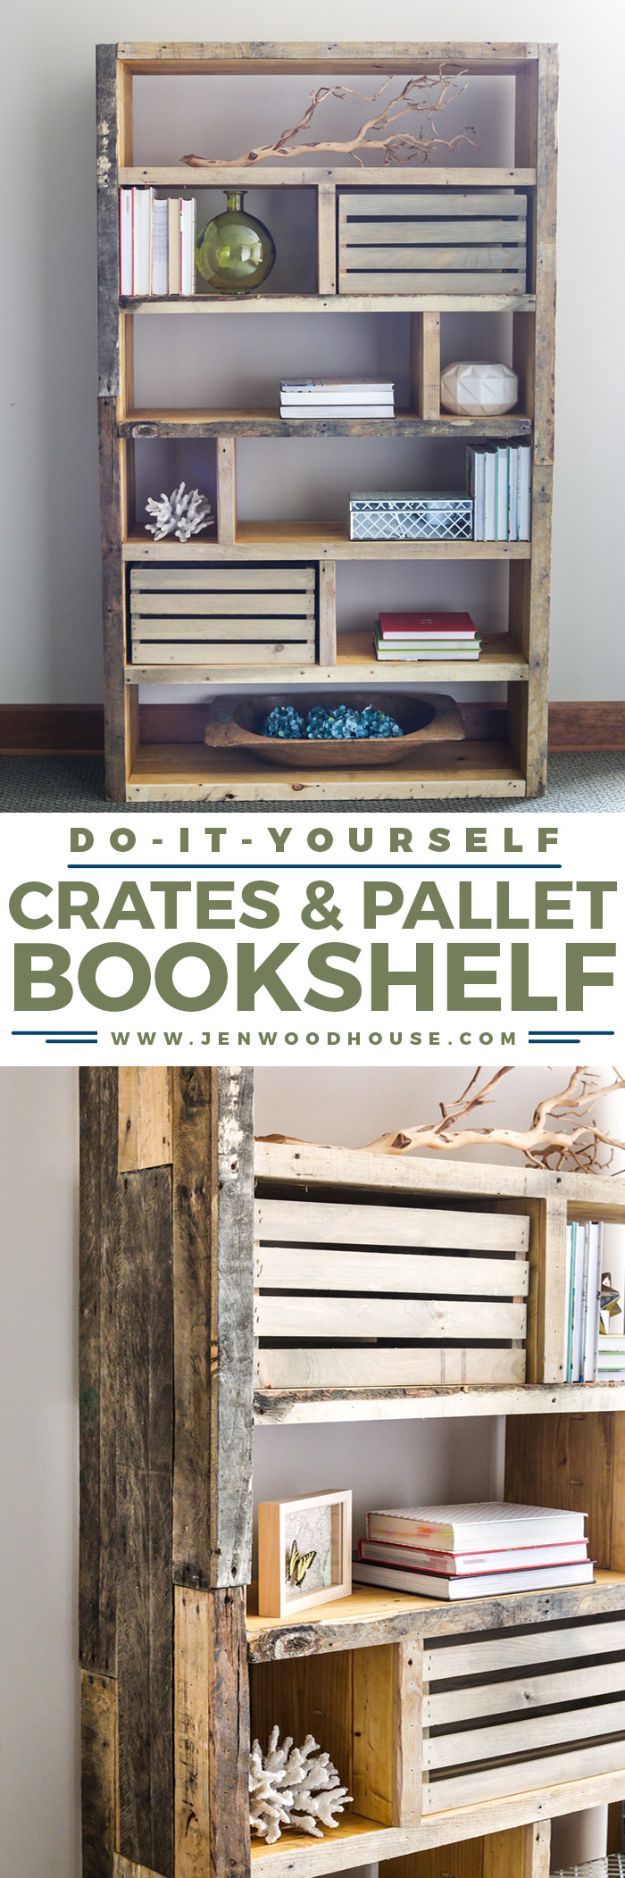 15 Charming Diy Bookshelf Ideas You D Love To Craft